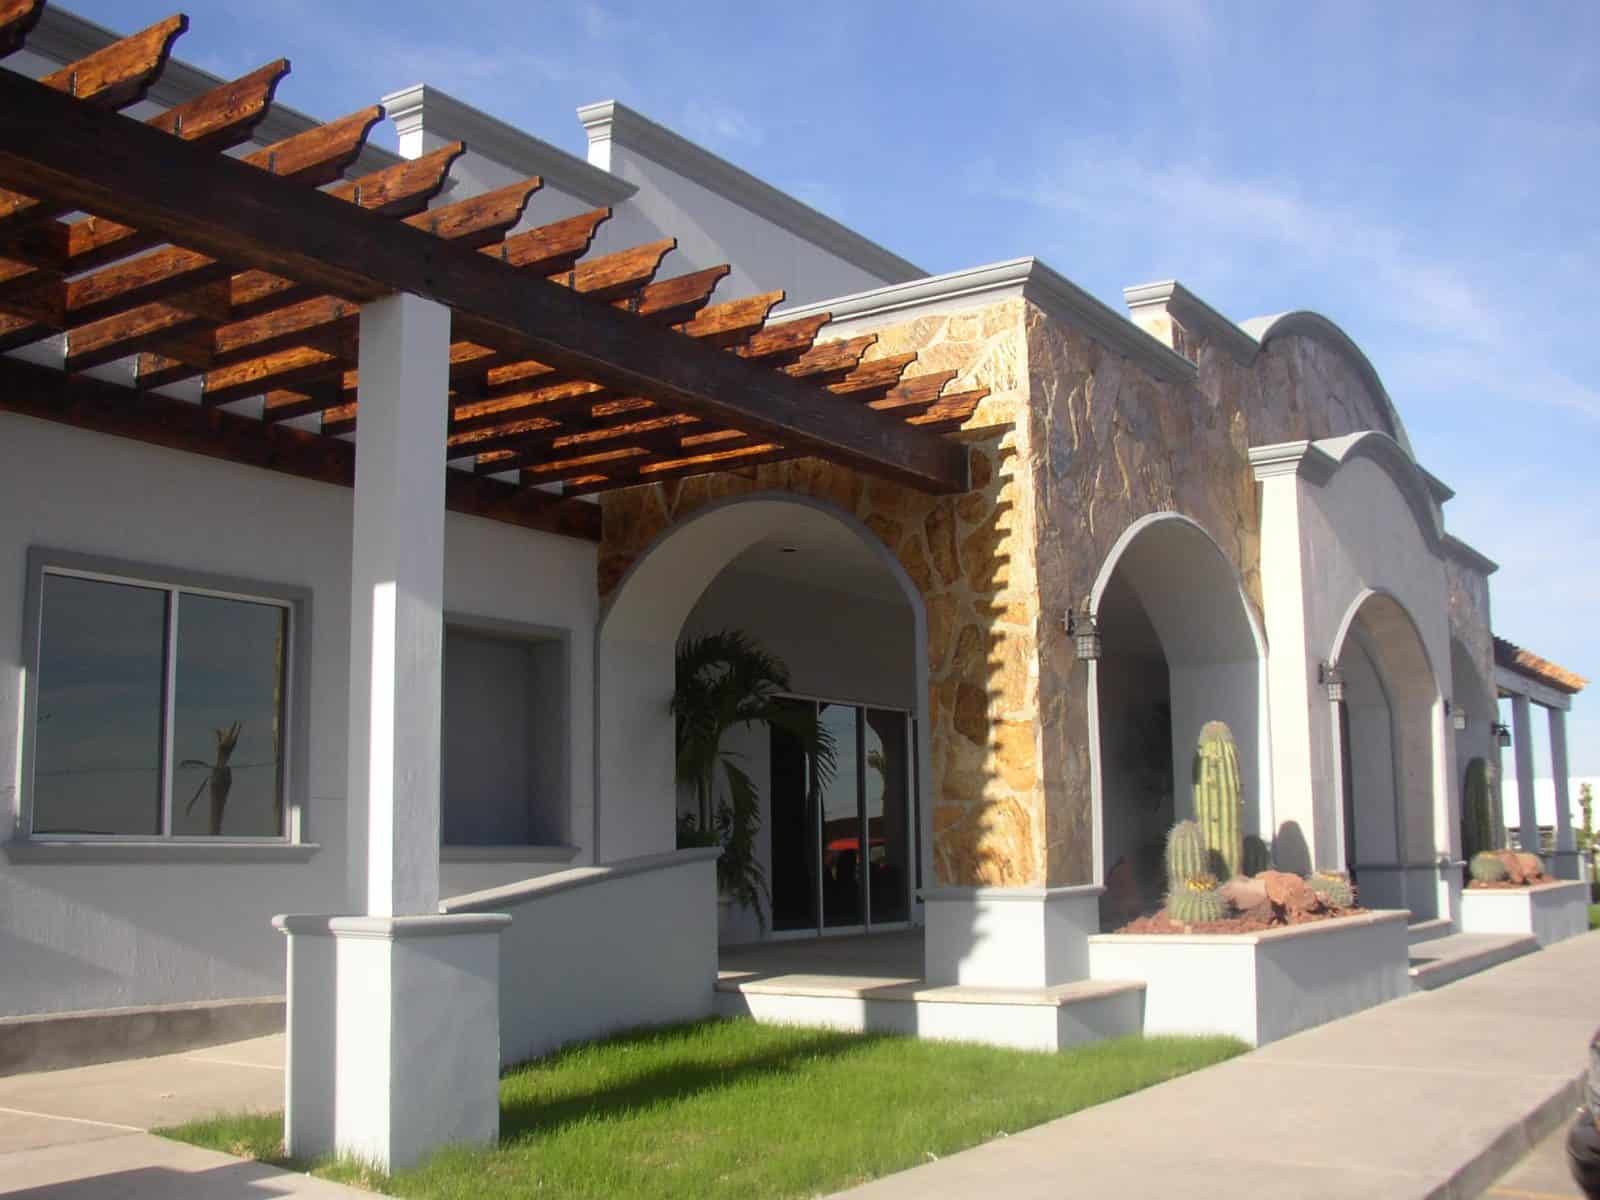 Eye level shot of Collins & Aikman facility, in Hermosillo, Sonora.